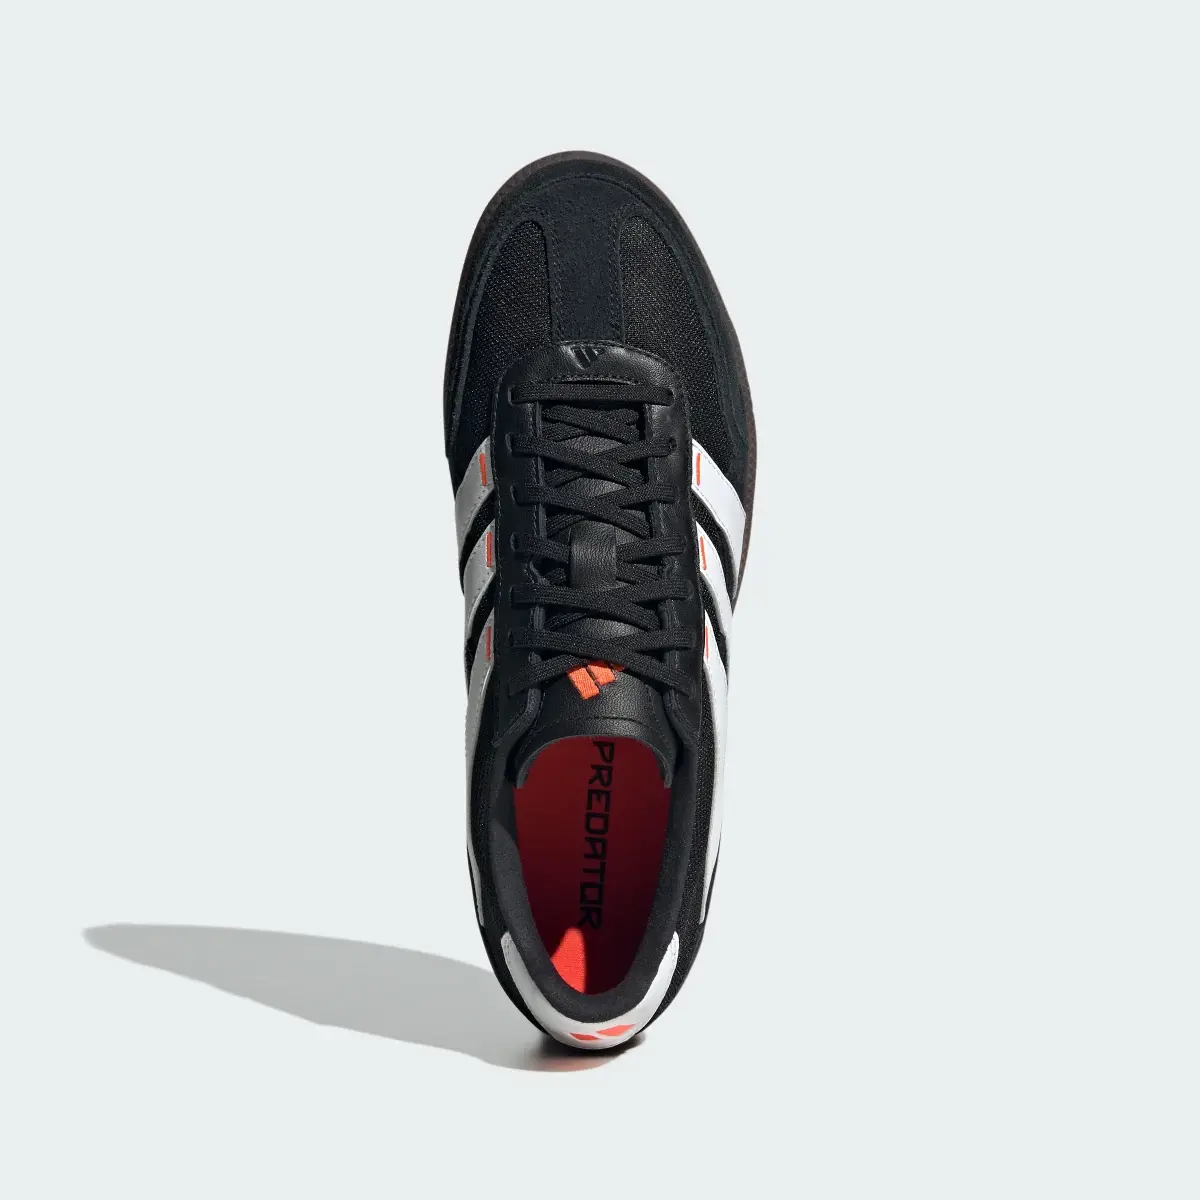 Adidas Predator Freestyle Football Boots. 3